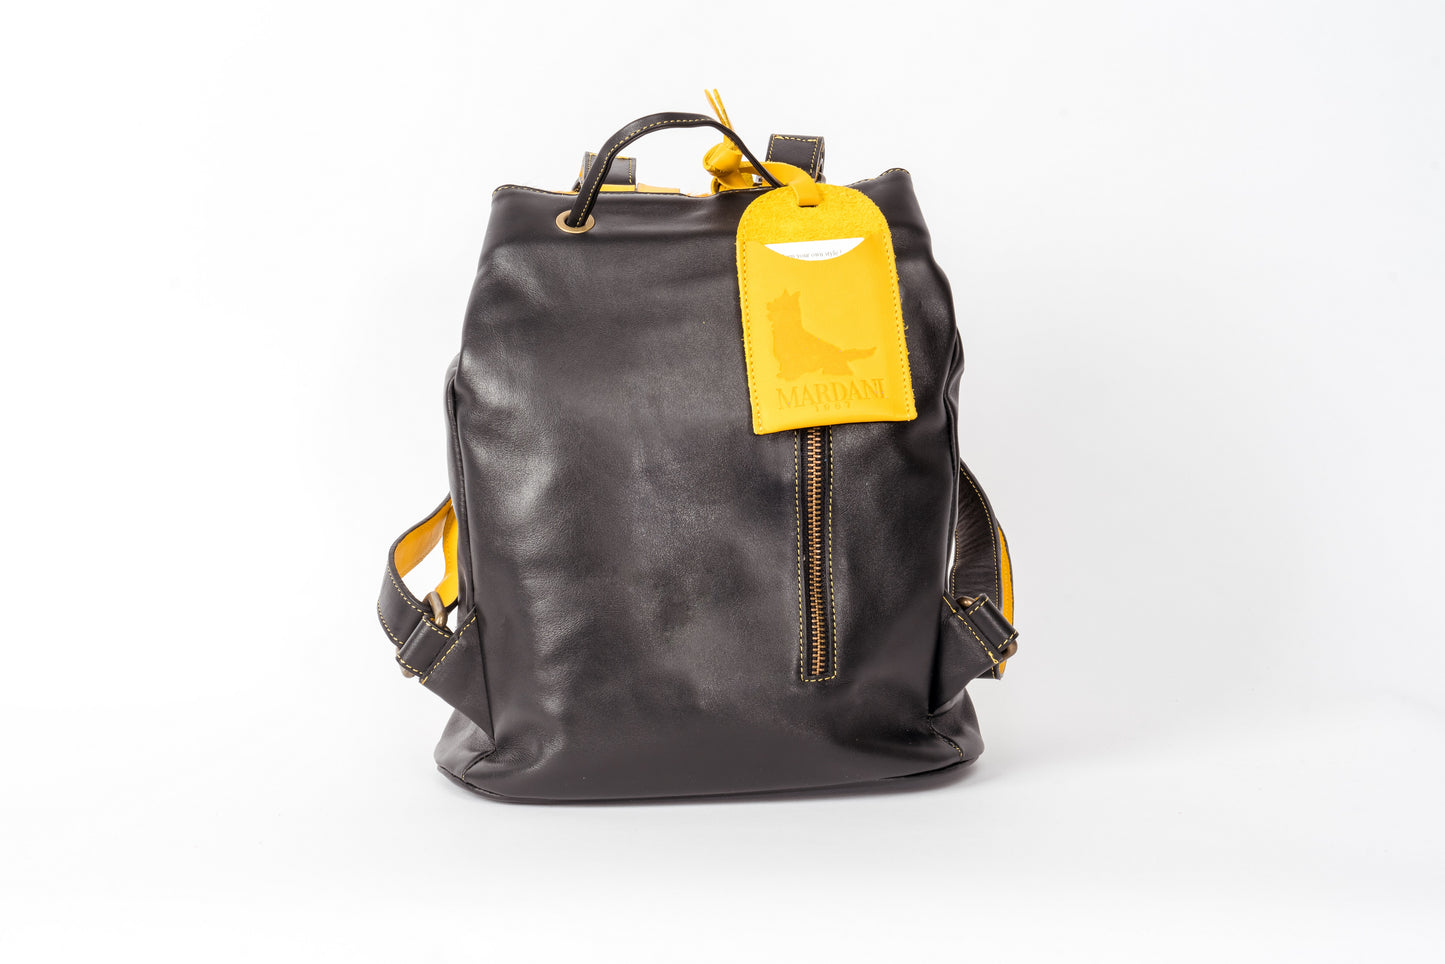 HARMONY BACKPACK CLAYBLUE, High Quality Italian Handmade Leather Backpack